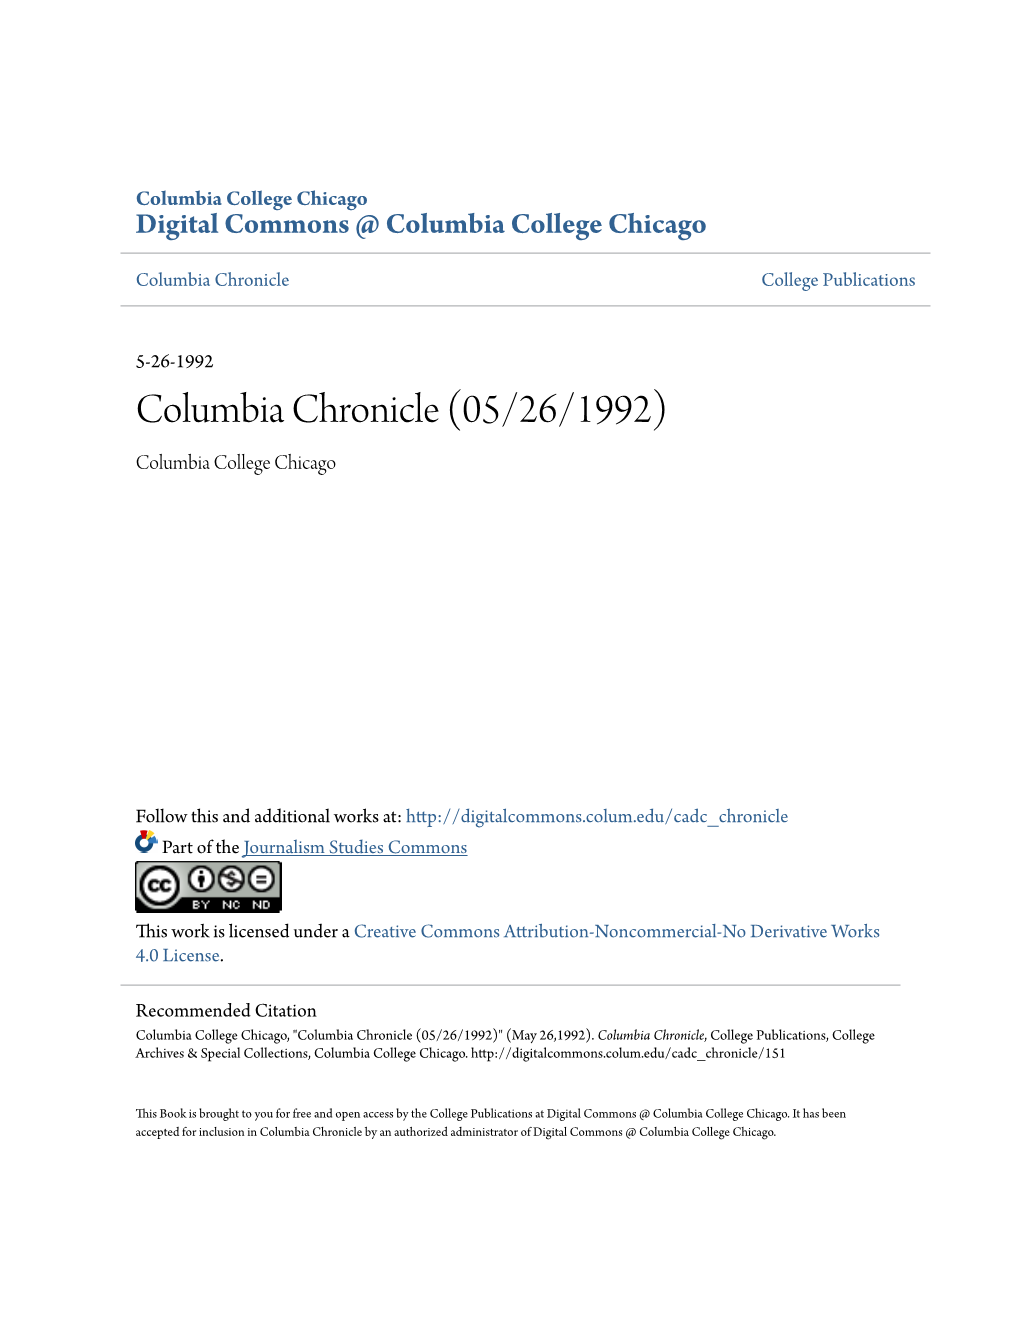 Columbia Chronicle (05/26/1992) Columbia College Chicago